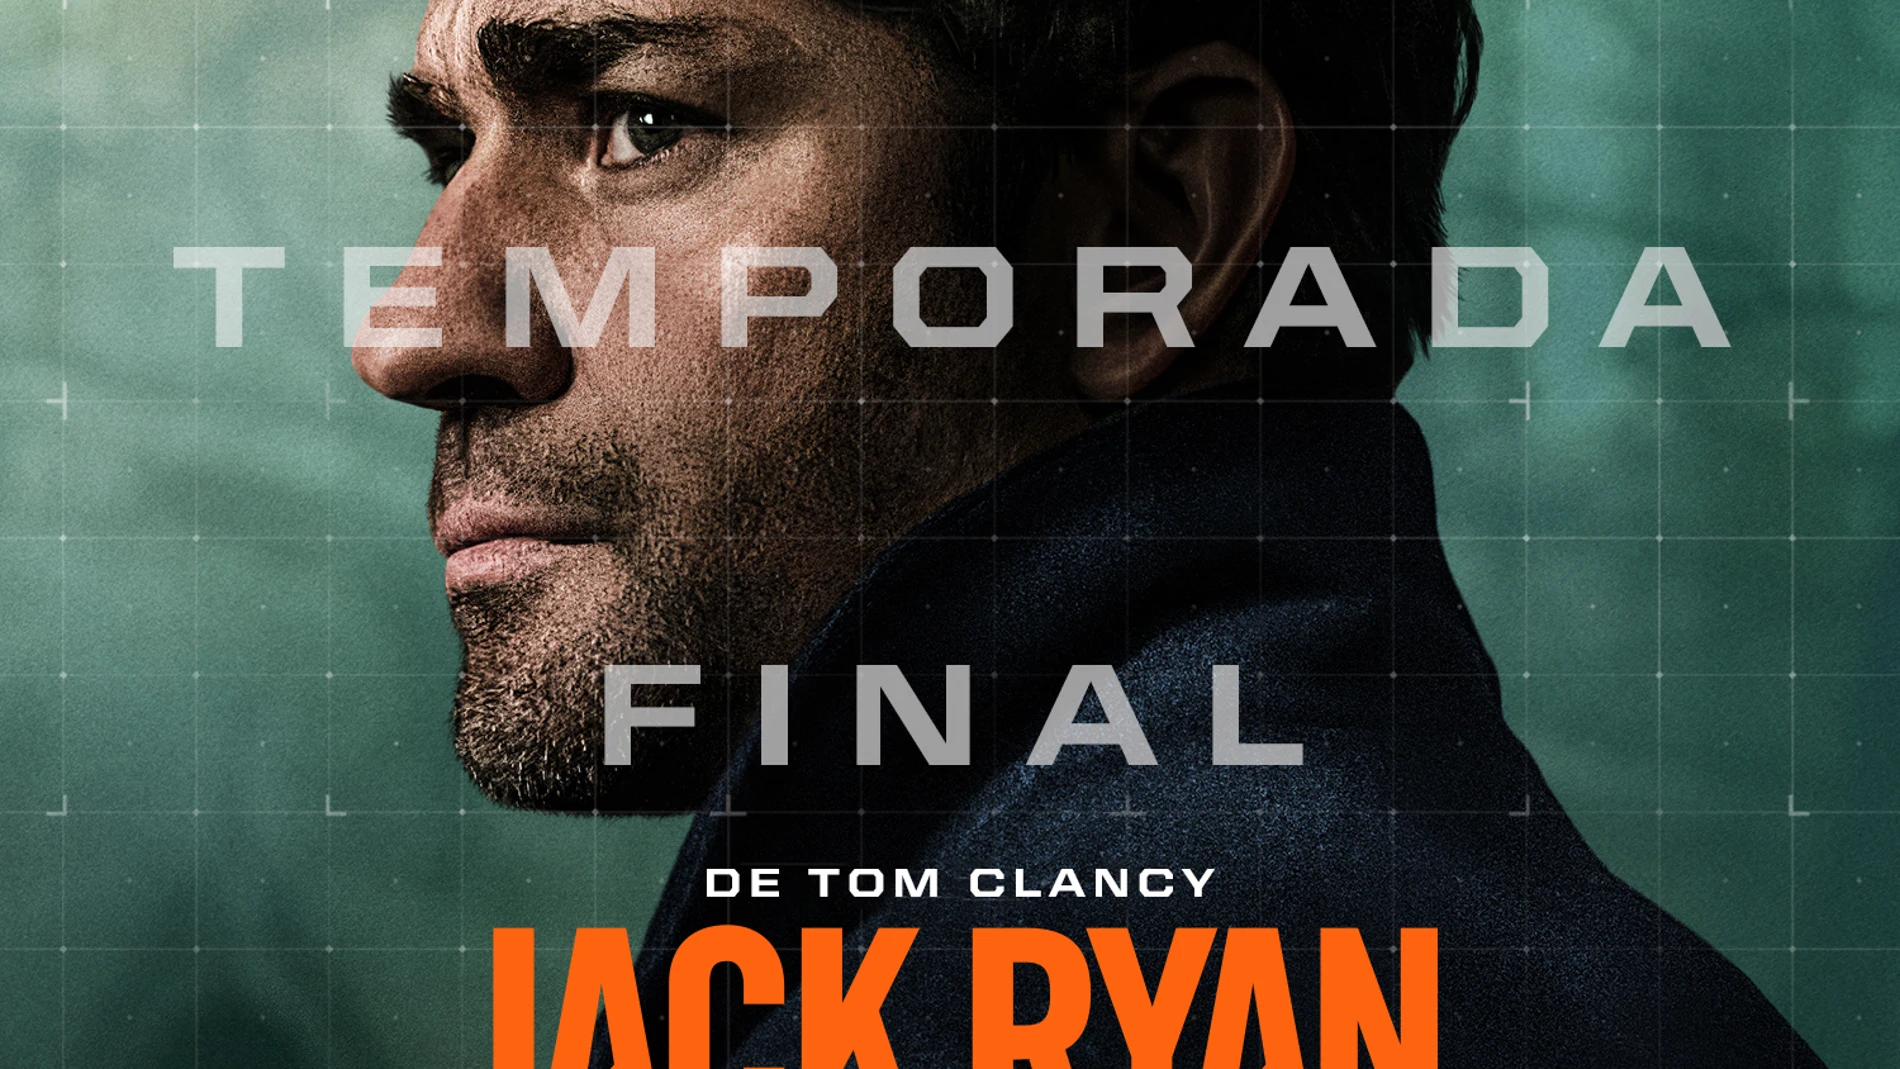 La aventura final de "Jack Ryan"